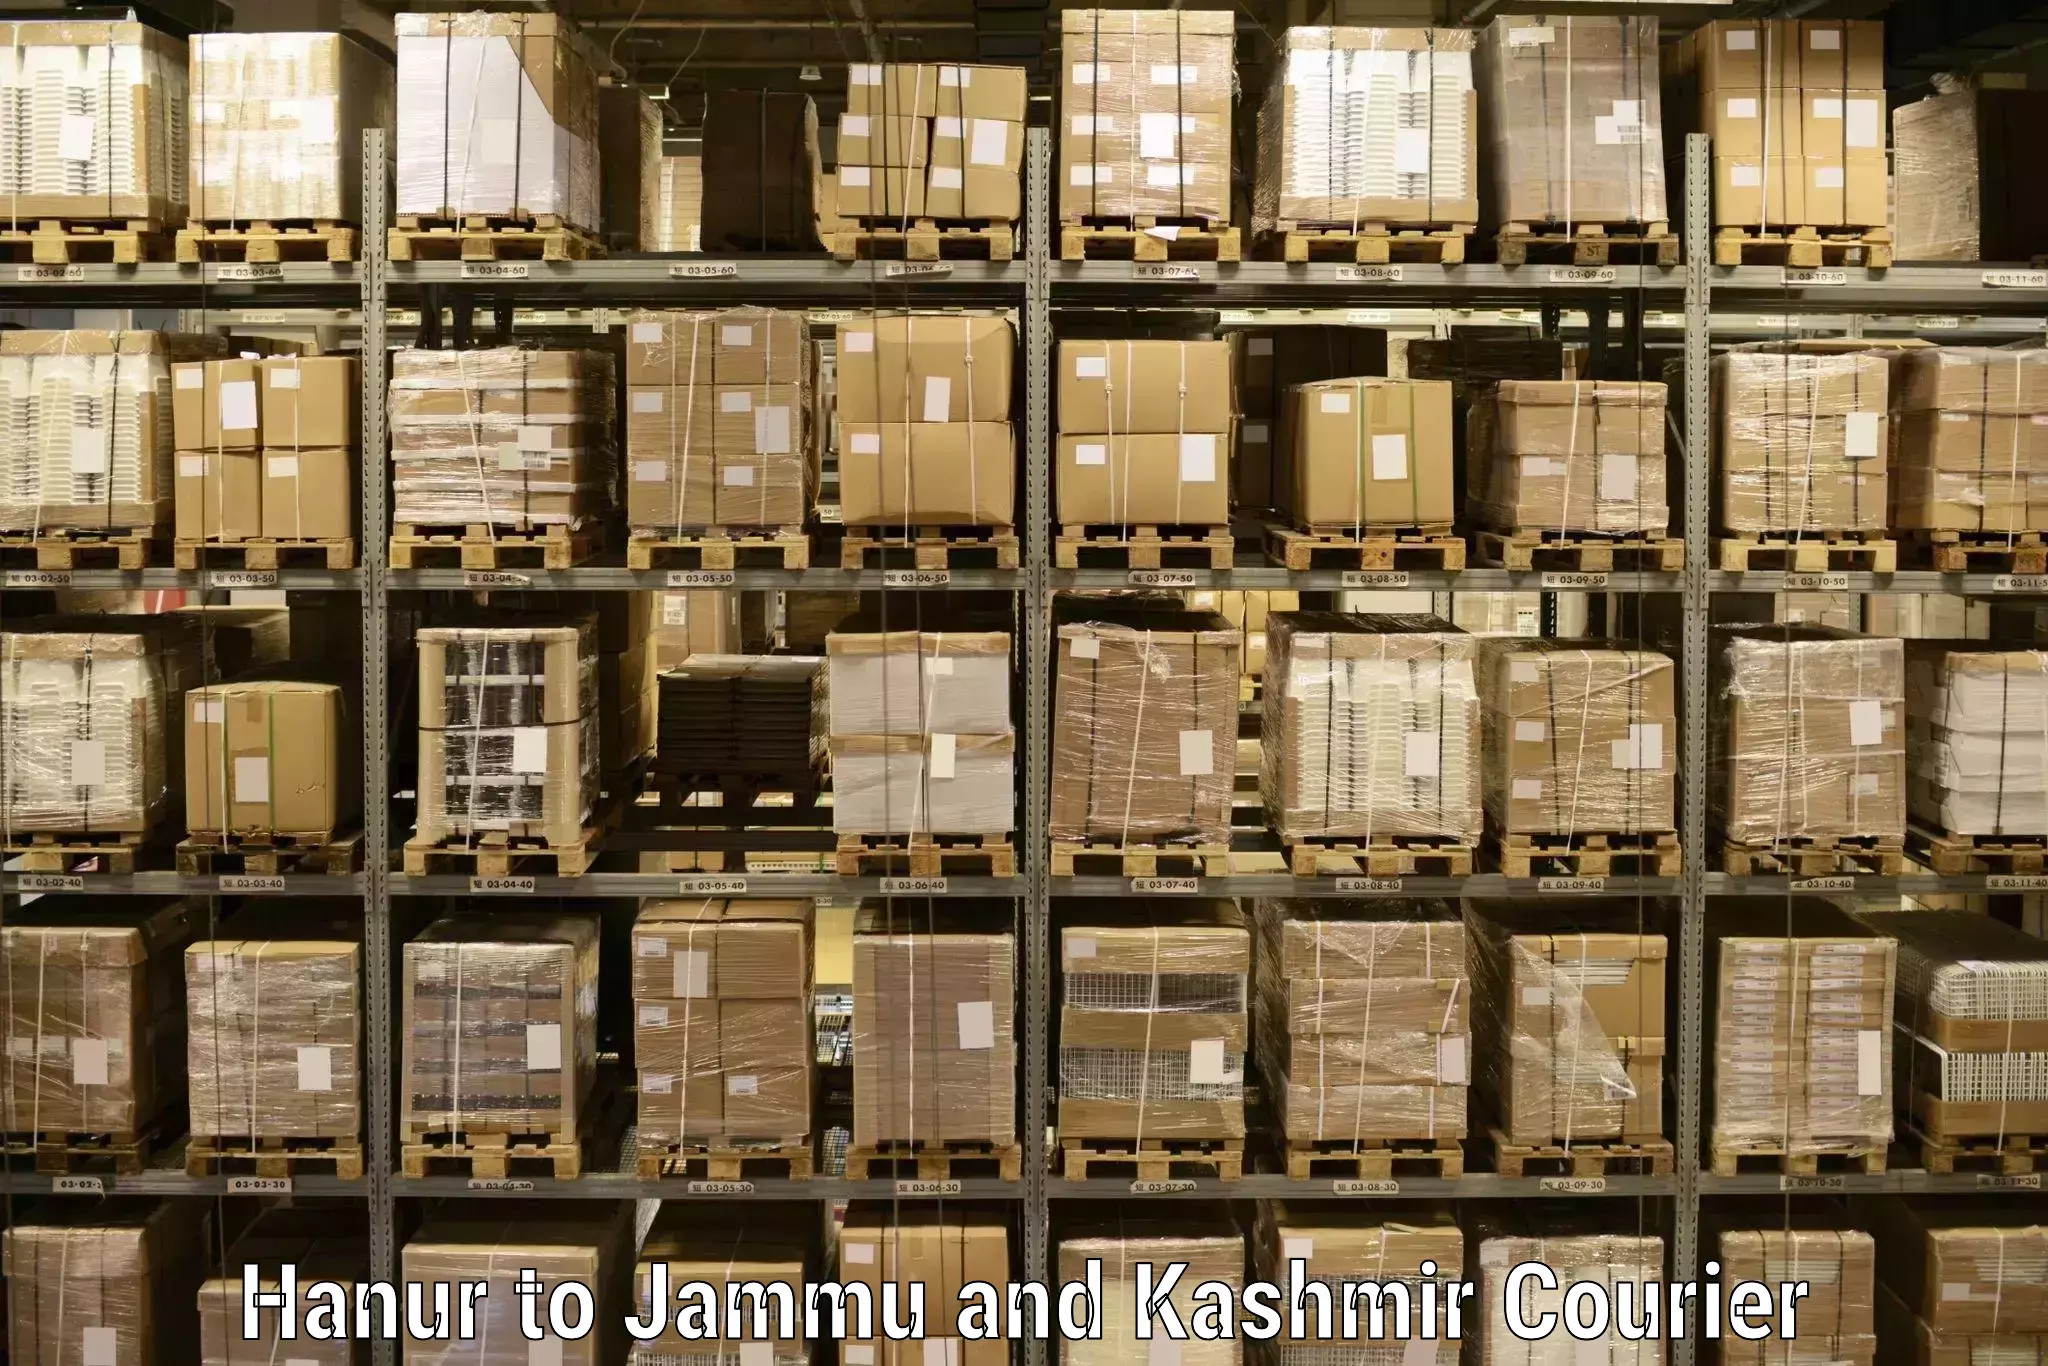 Courier service partnerships in Hanur to Kargil